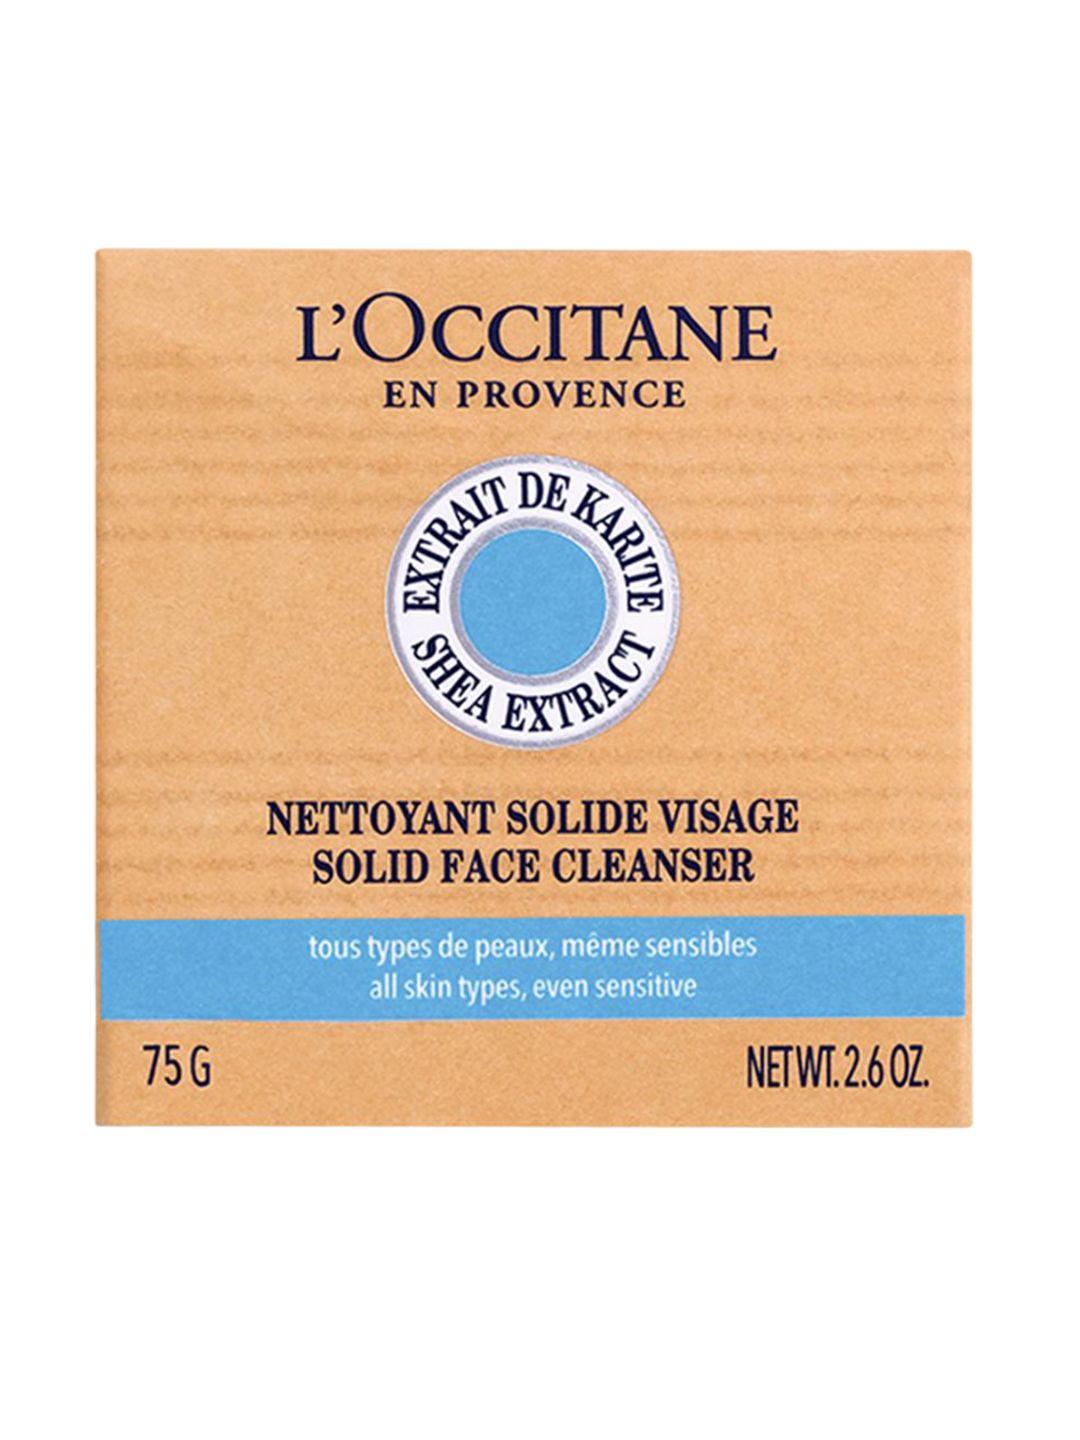 loccitane en provence shea butter solid face cleanser - 75g